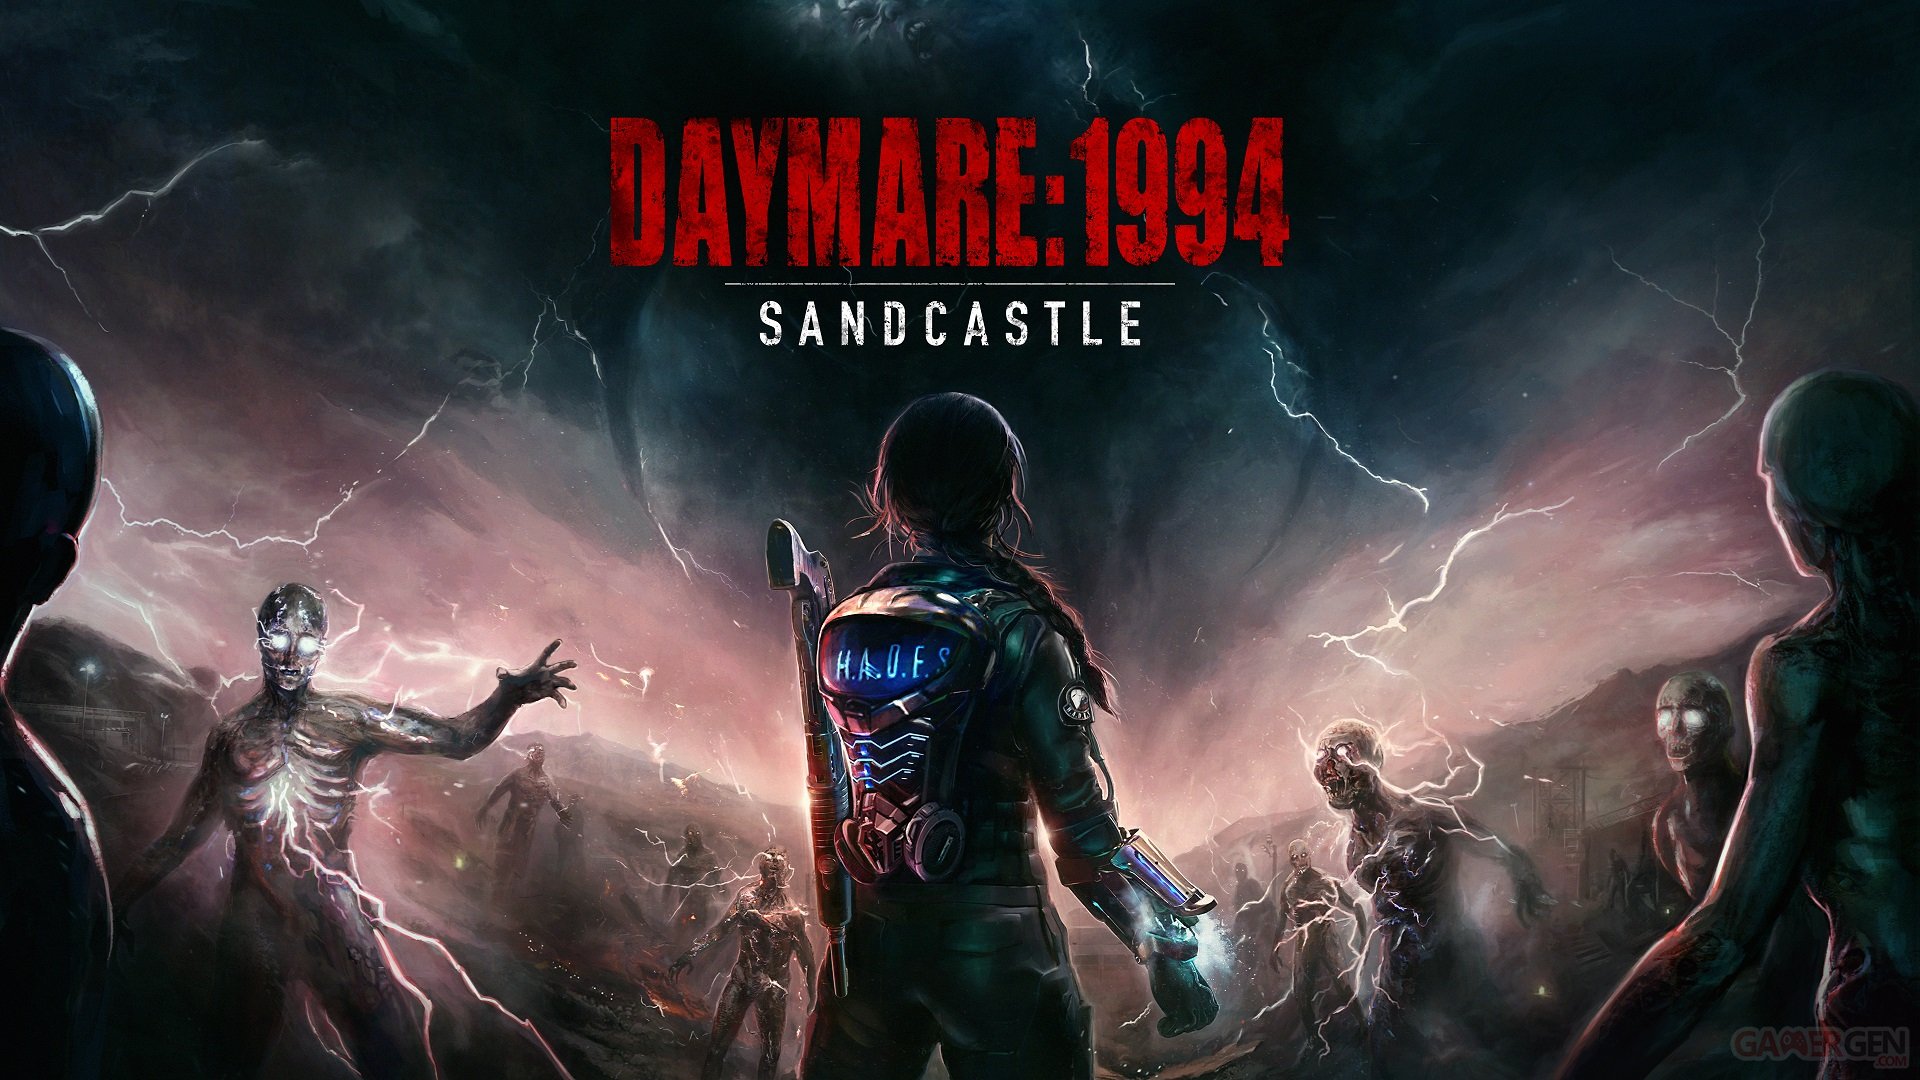 Daymare: 1994 Sandcastle ofereix una experiència de terror en format físic a PlayStation